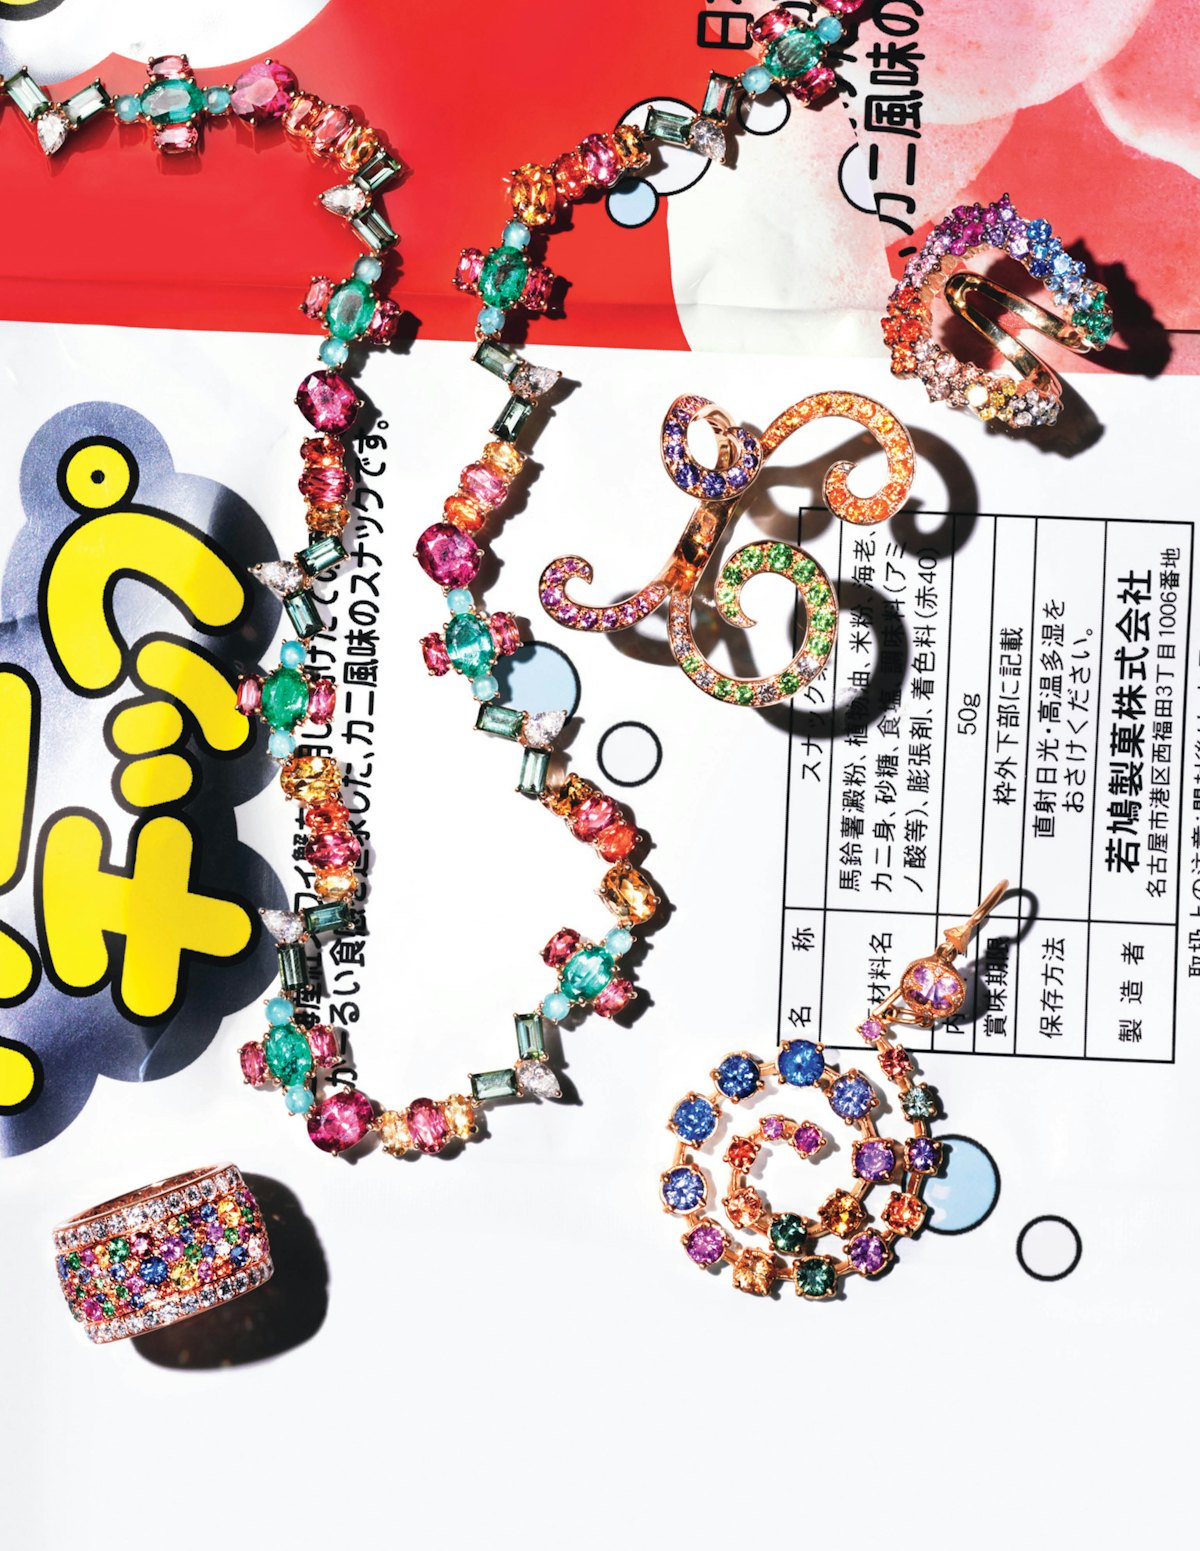 Pop Rocks Make A Statement In Brightly Colored Fine Jewelry